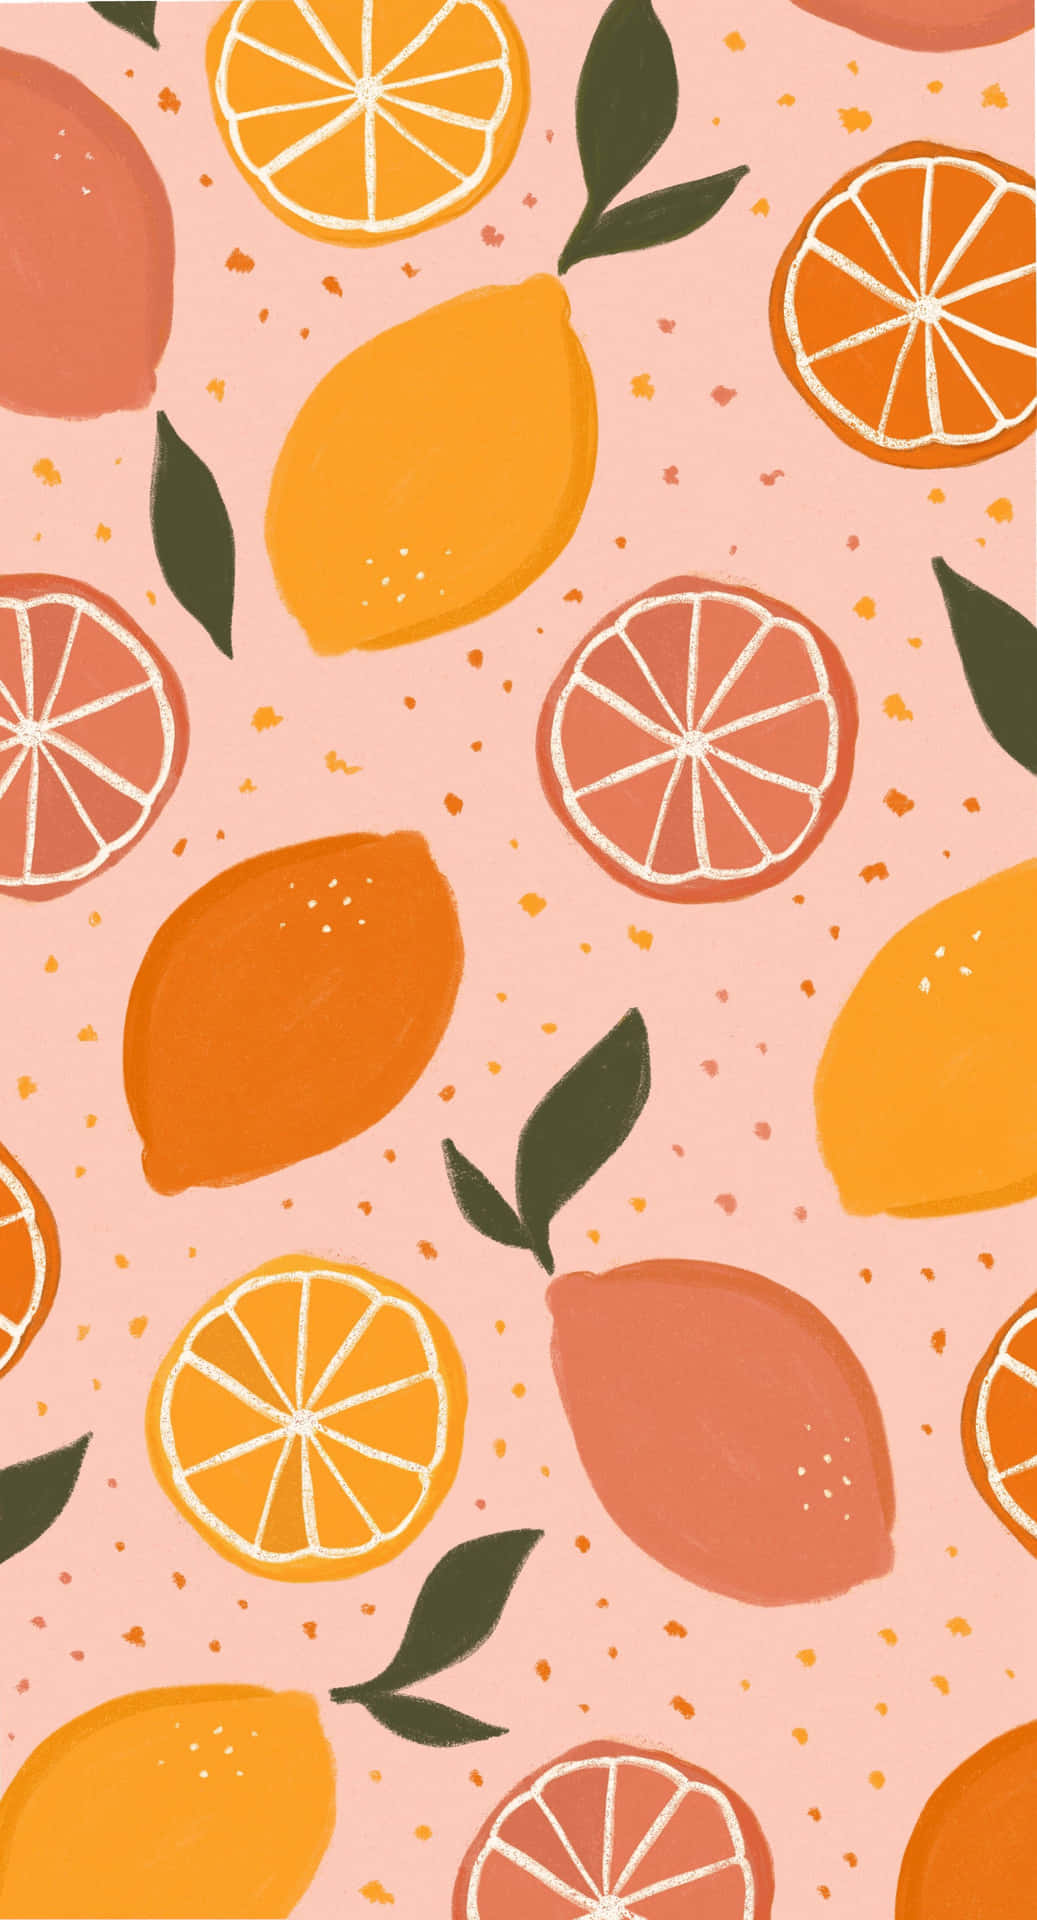 Colorful Citrus Pattern Illustration Background